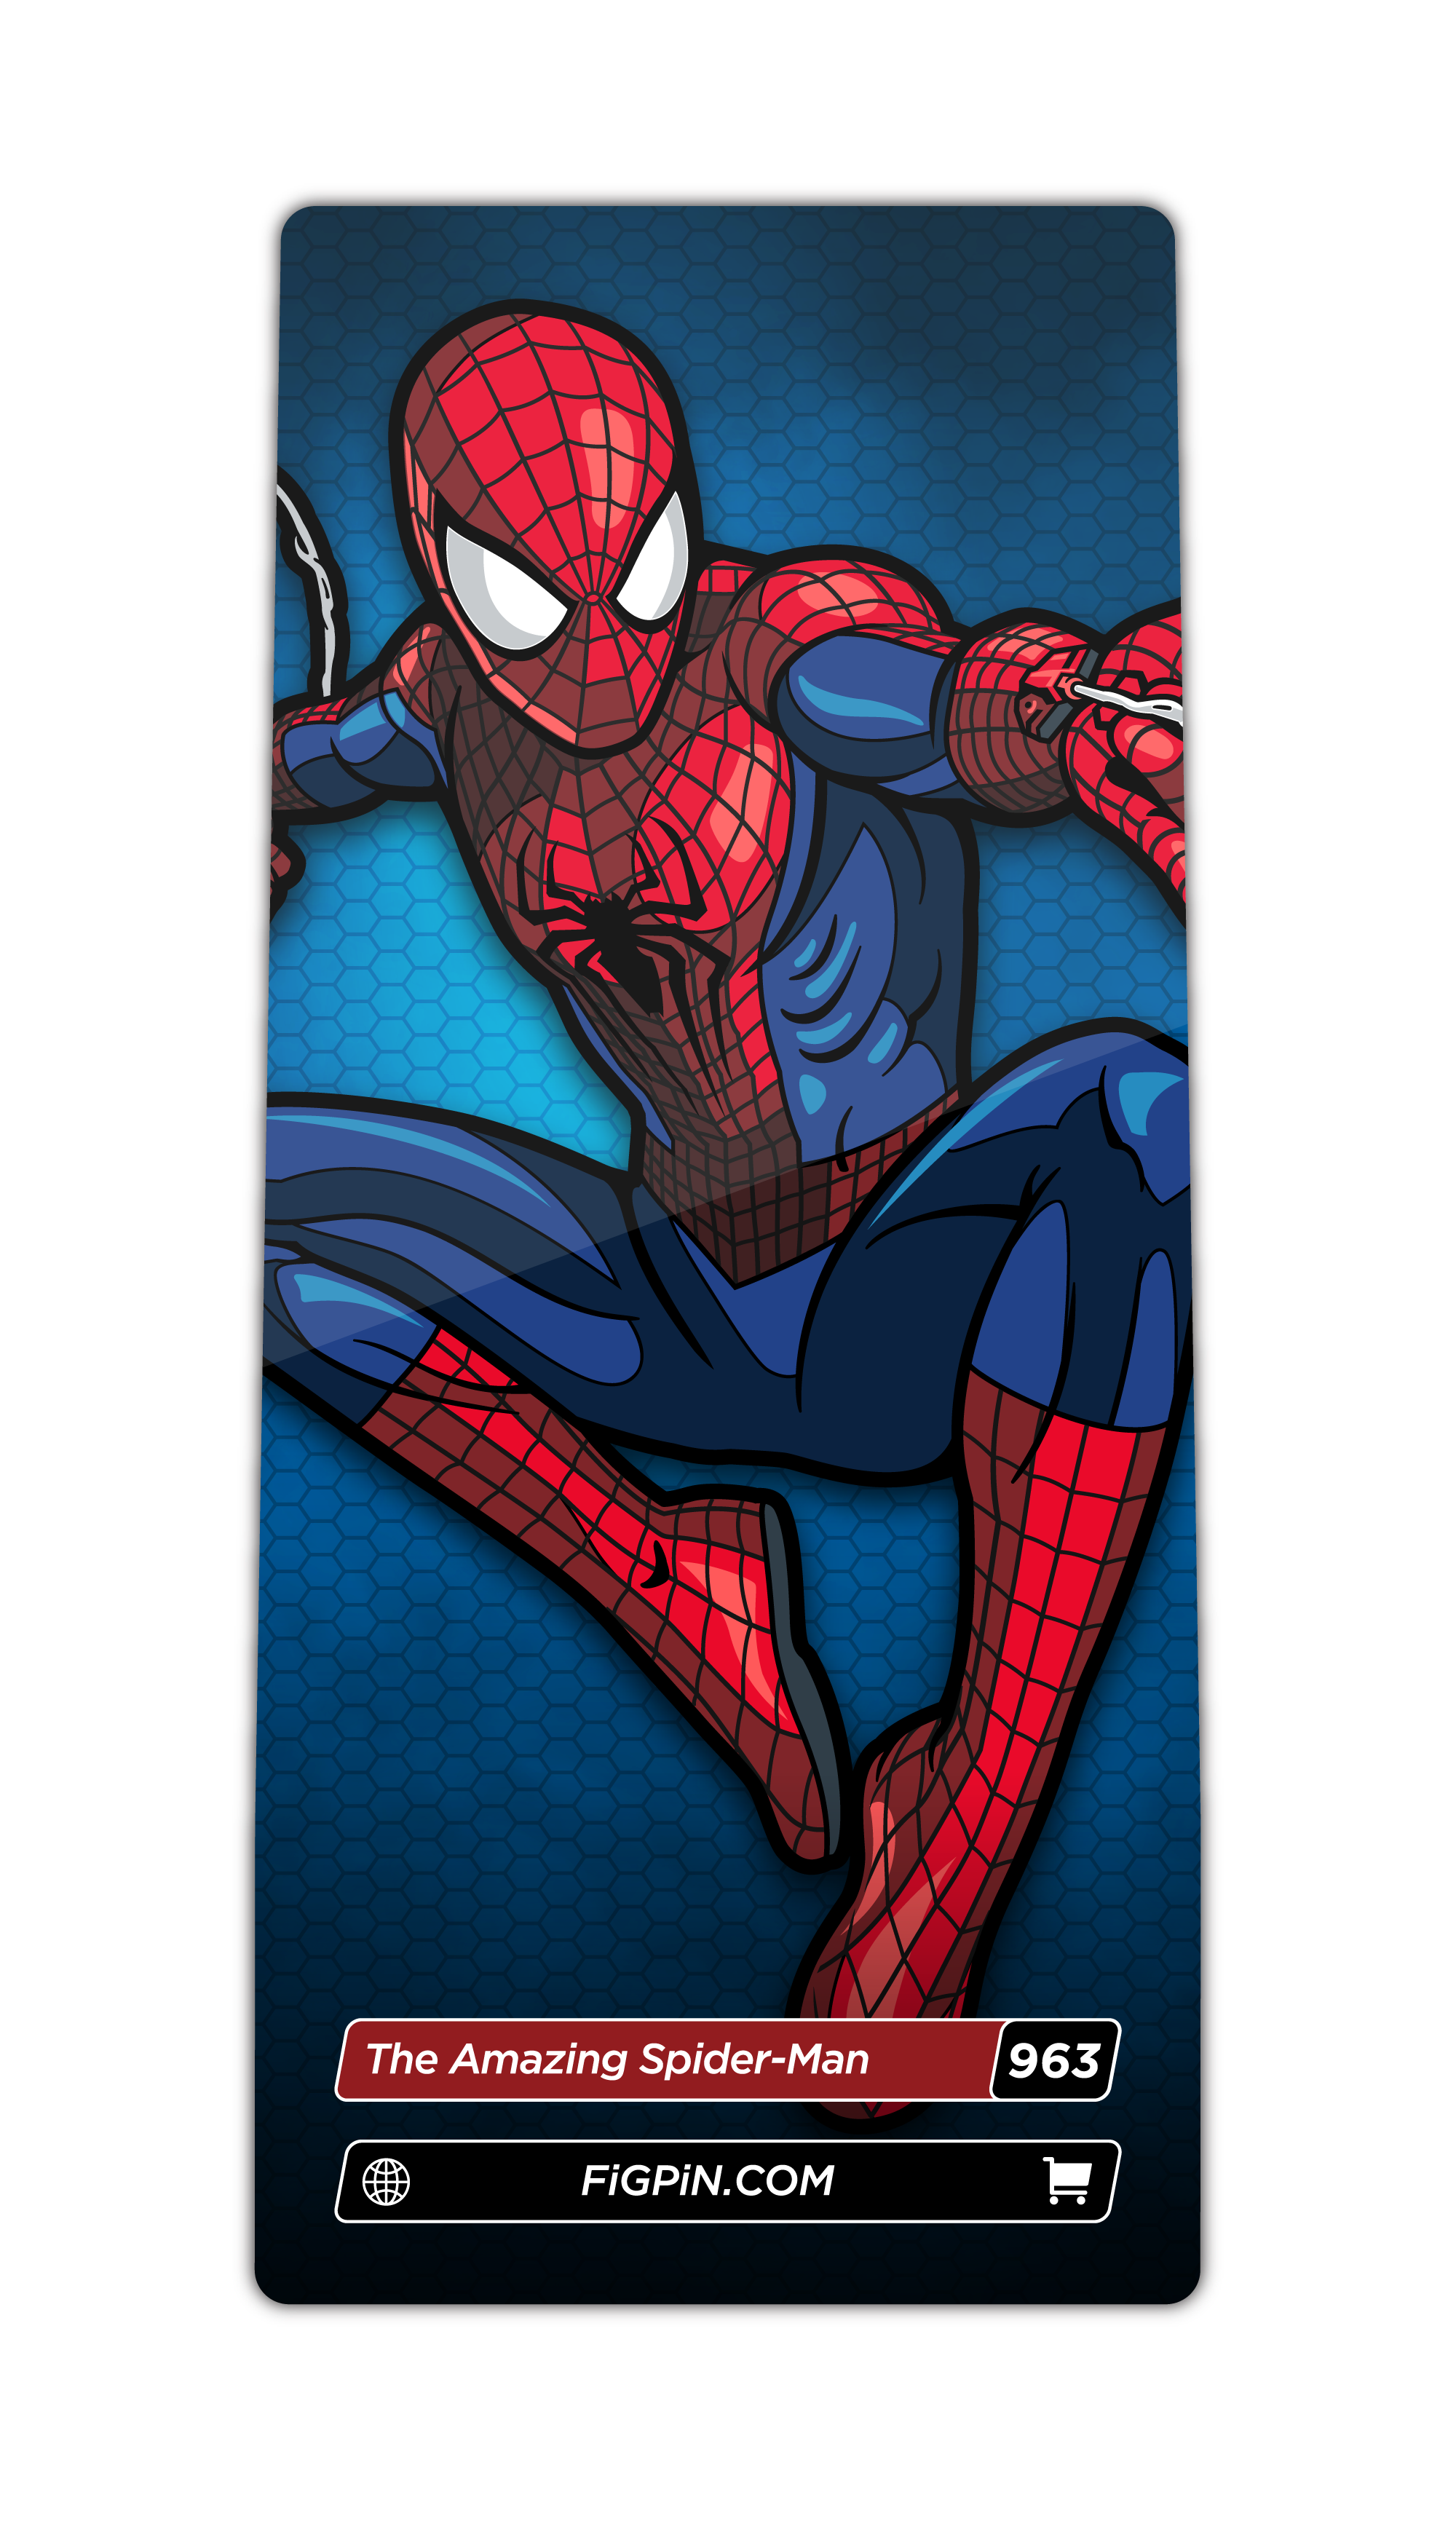 The Amazing Spider-Man (963)